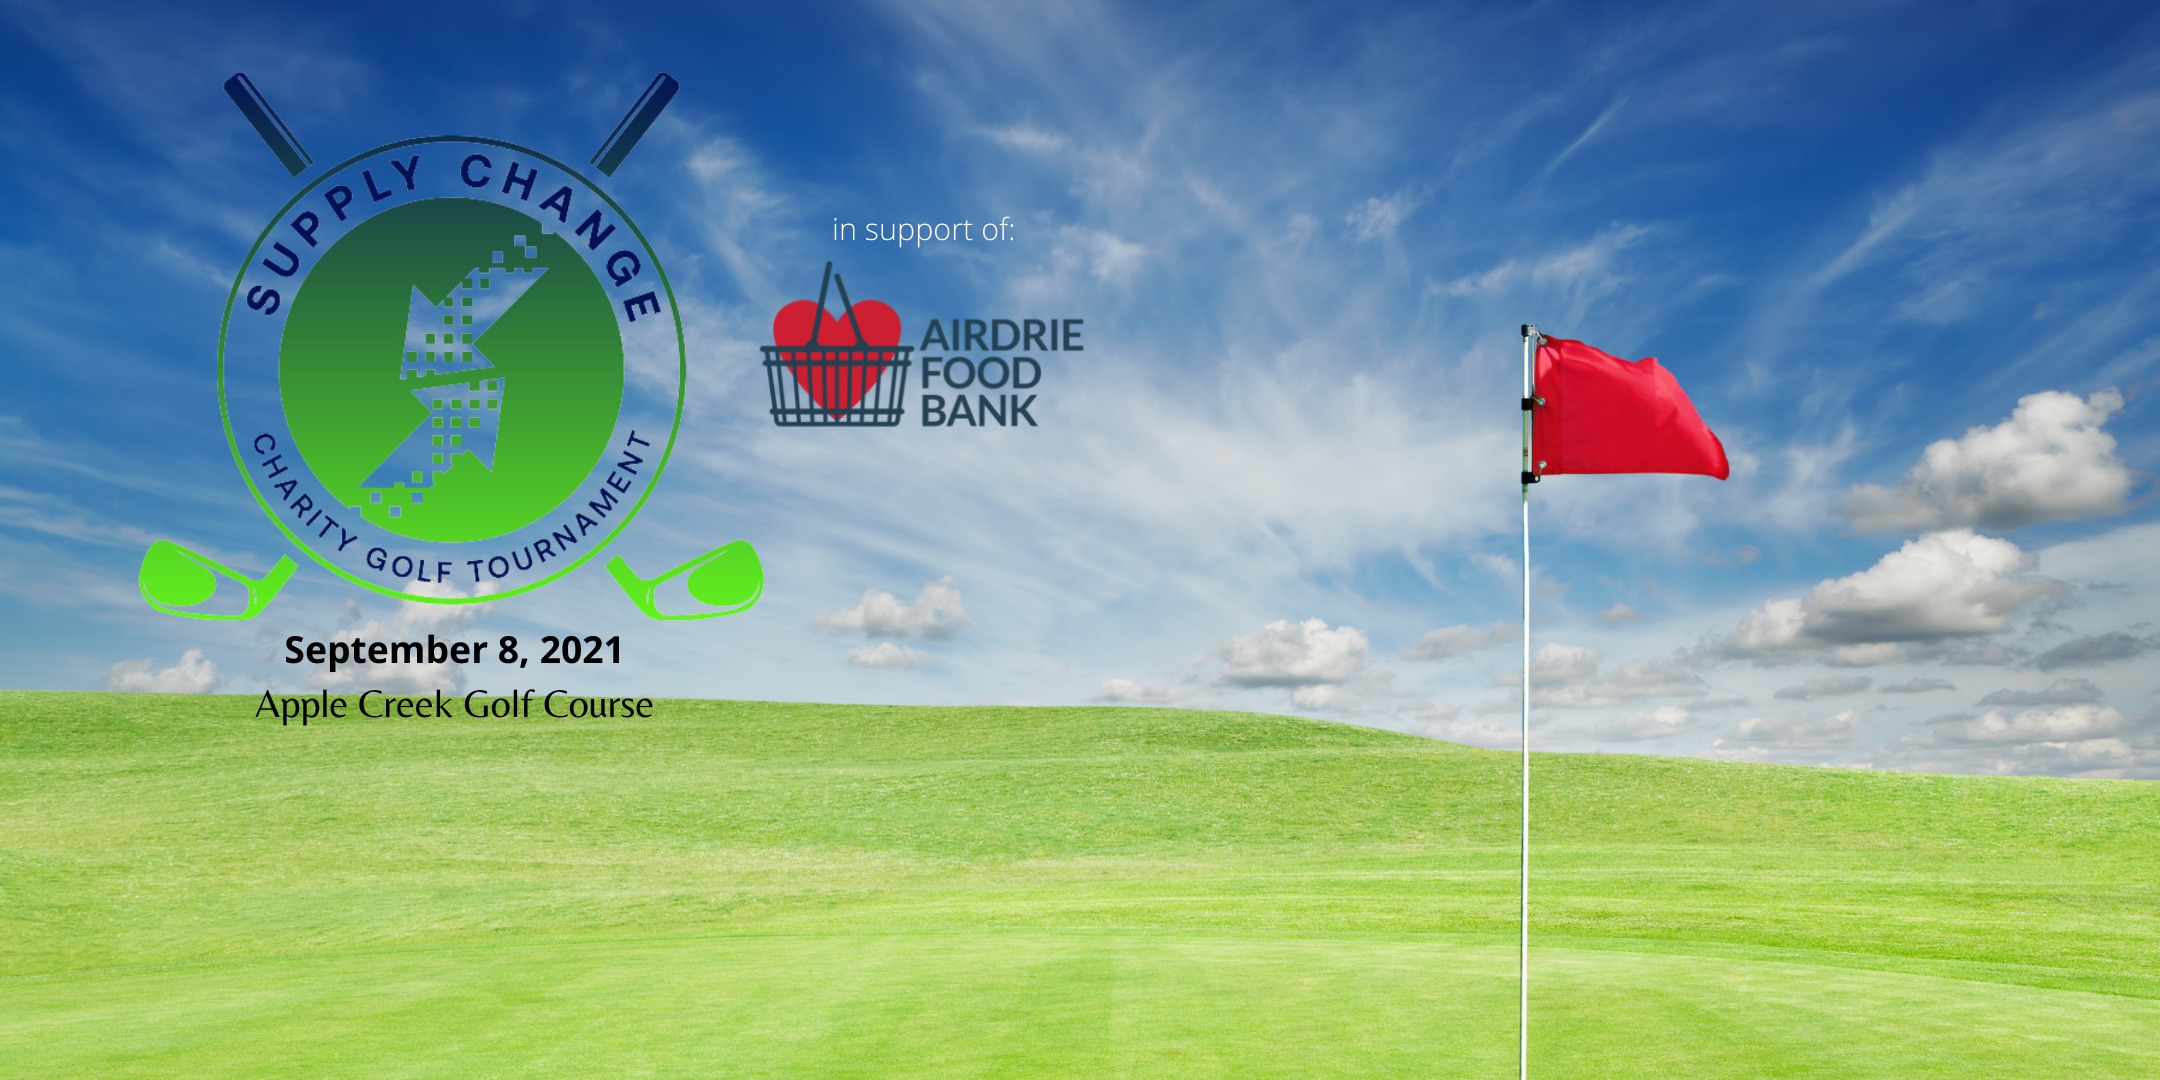 Supply Change Charity Golf Tournament 2021